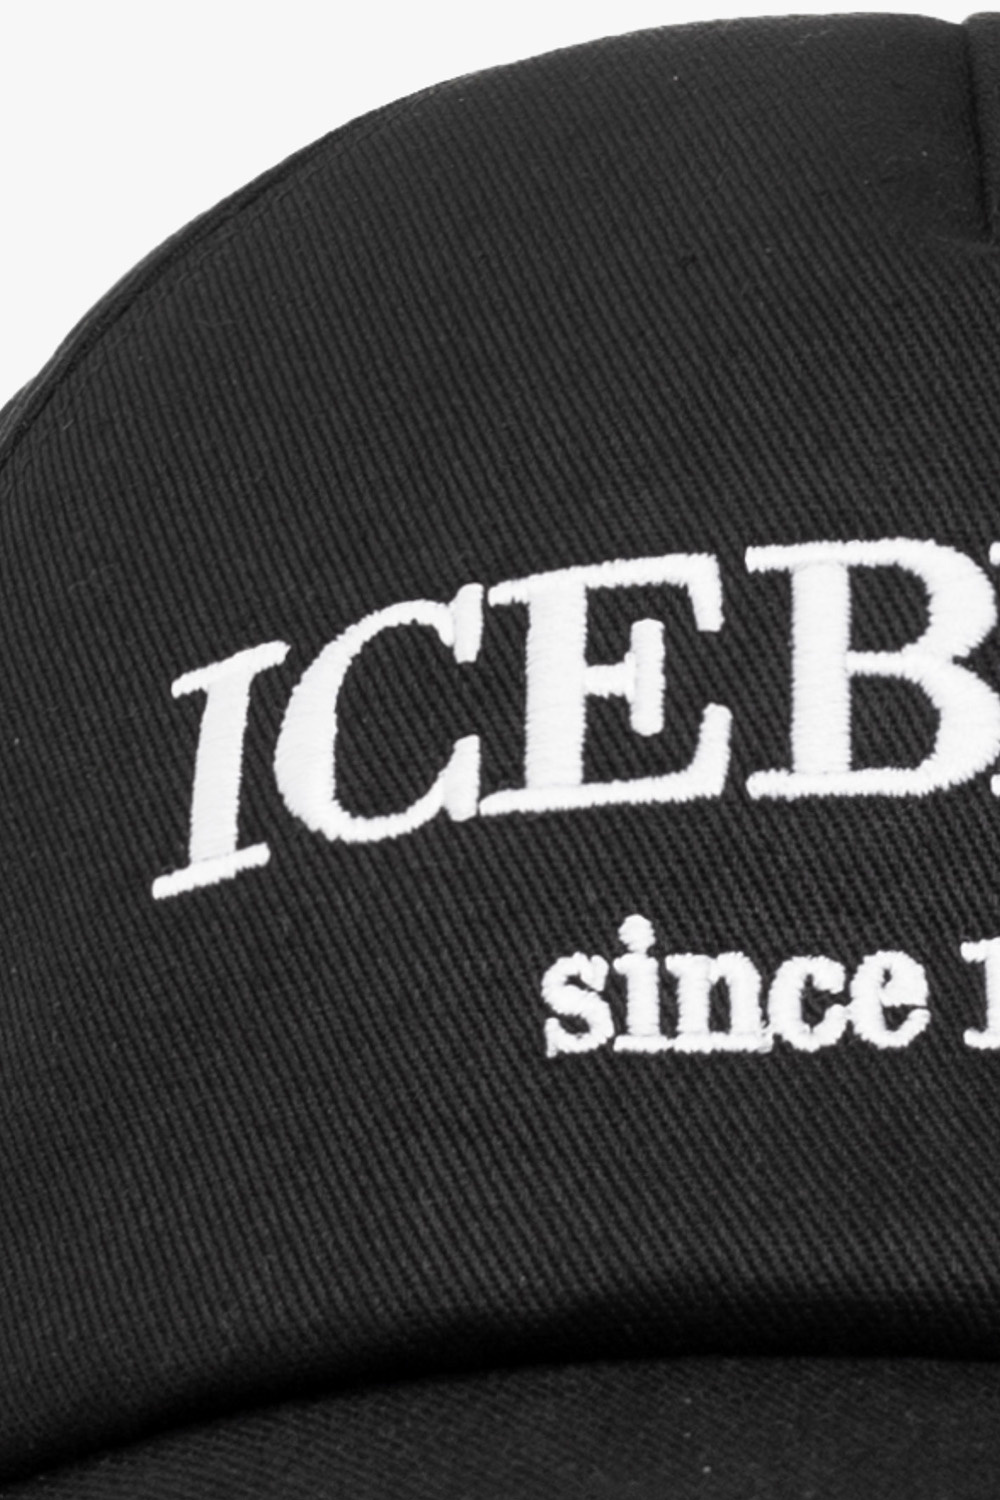 Iceberg Baseball cap